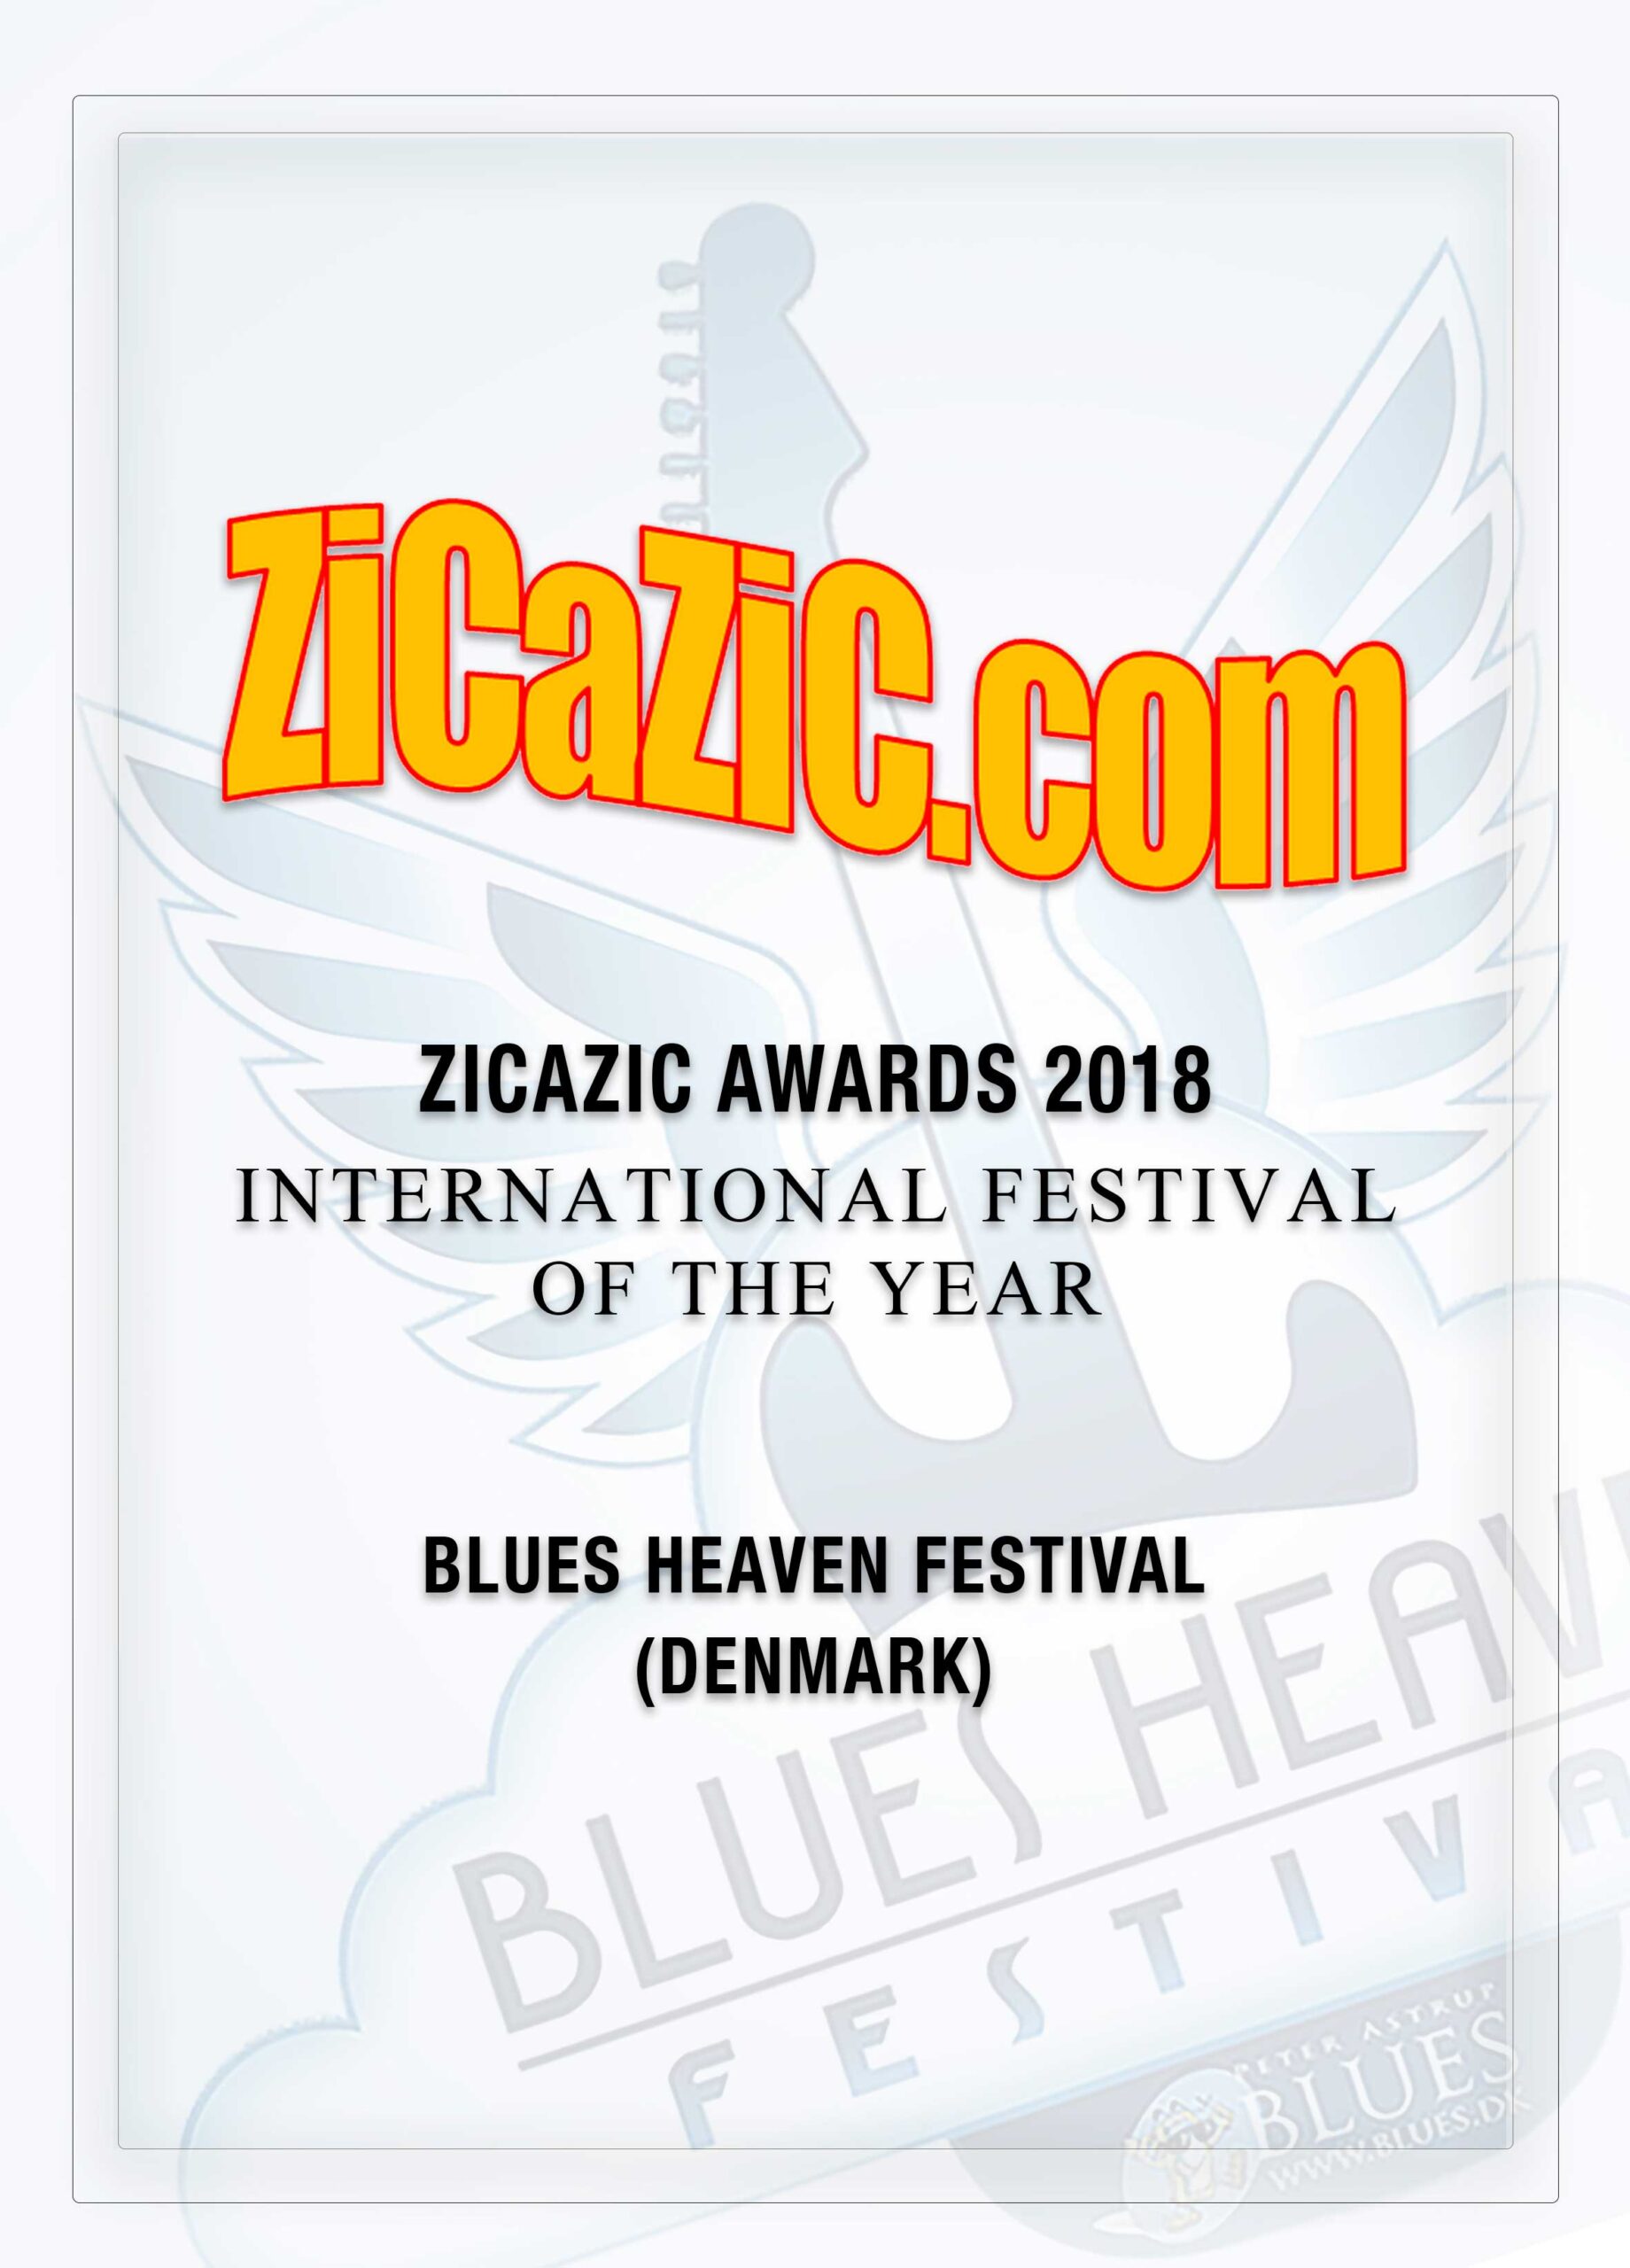 Zicazic best festival scaled